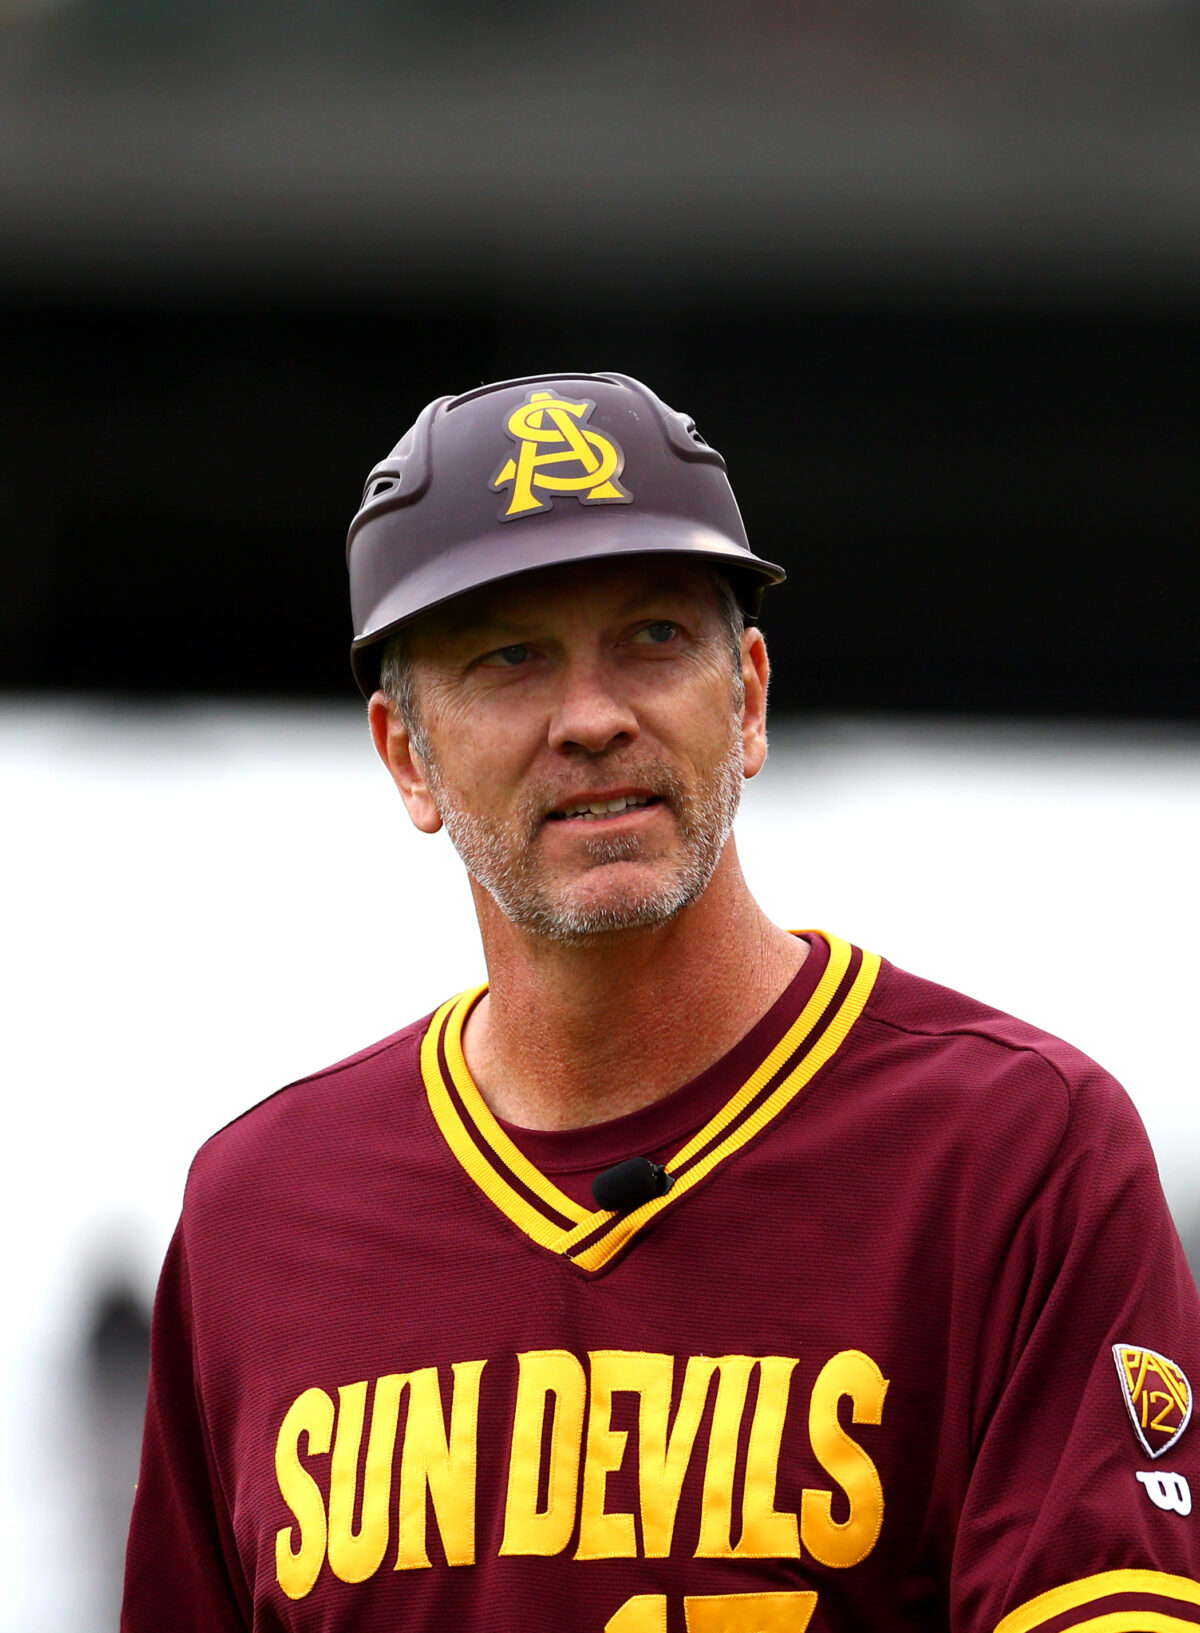 Michigan baseball hires new coach